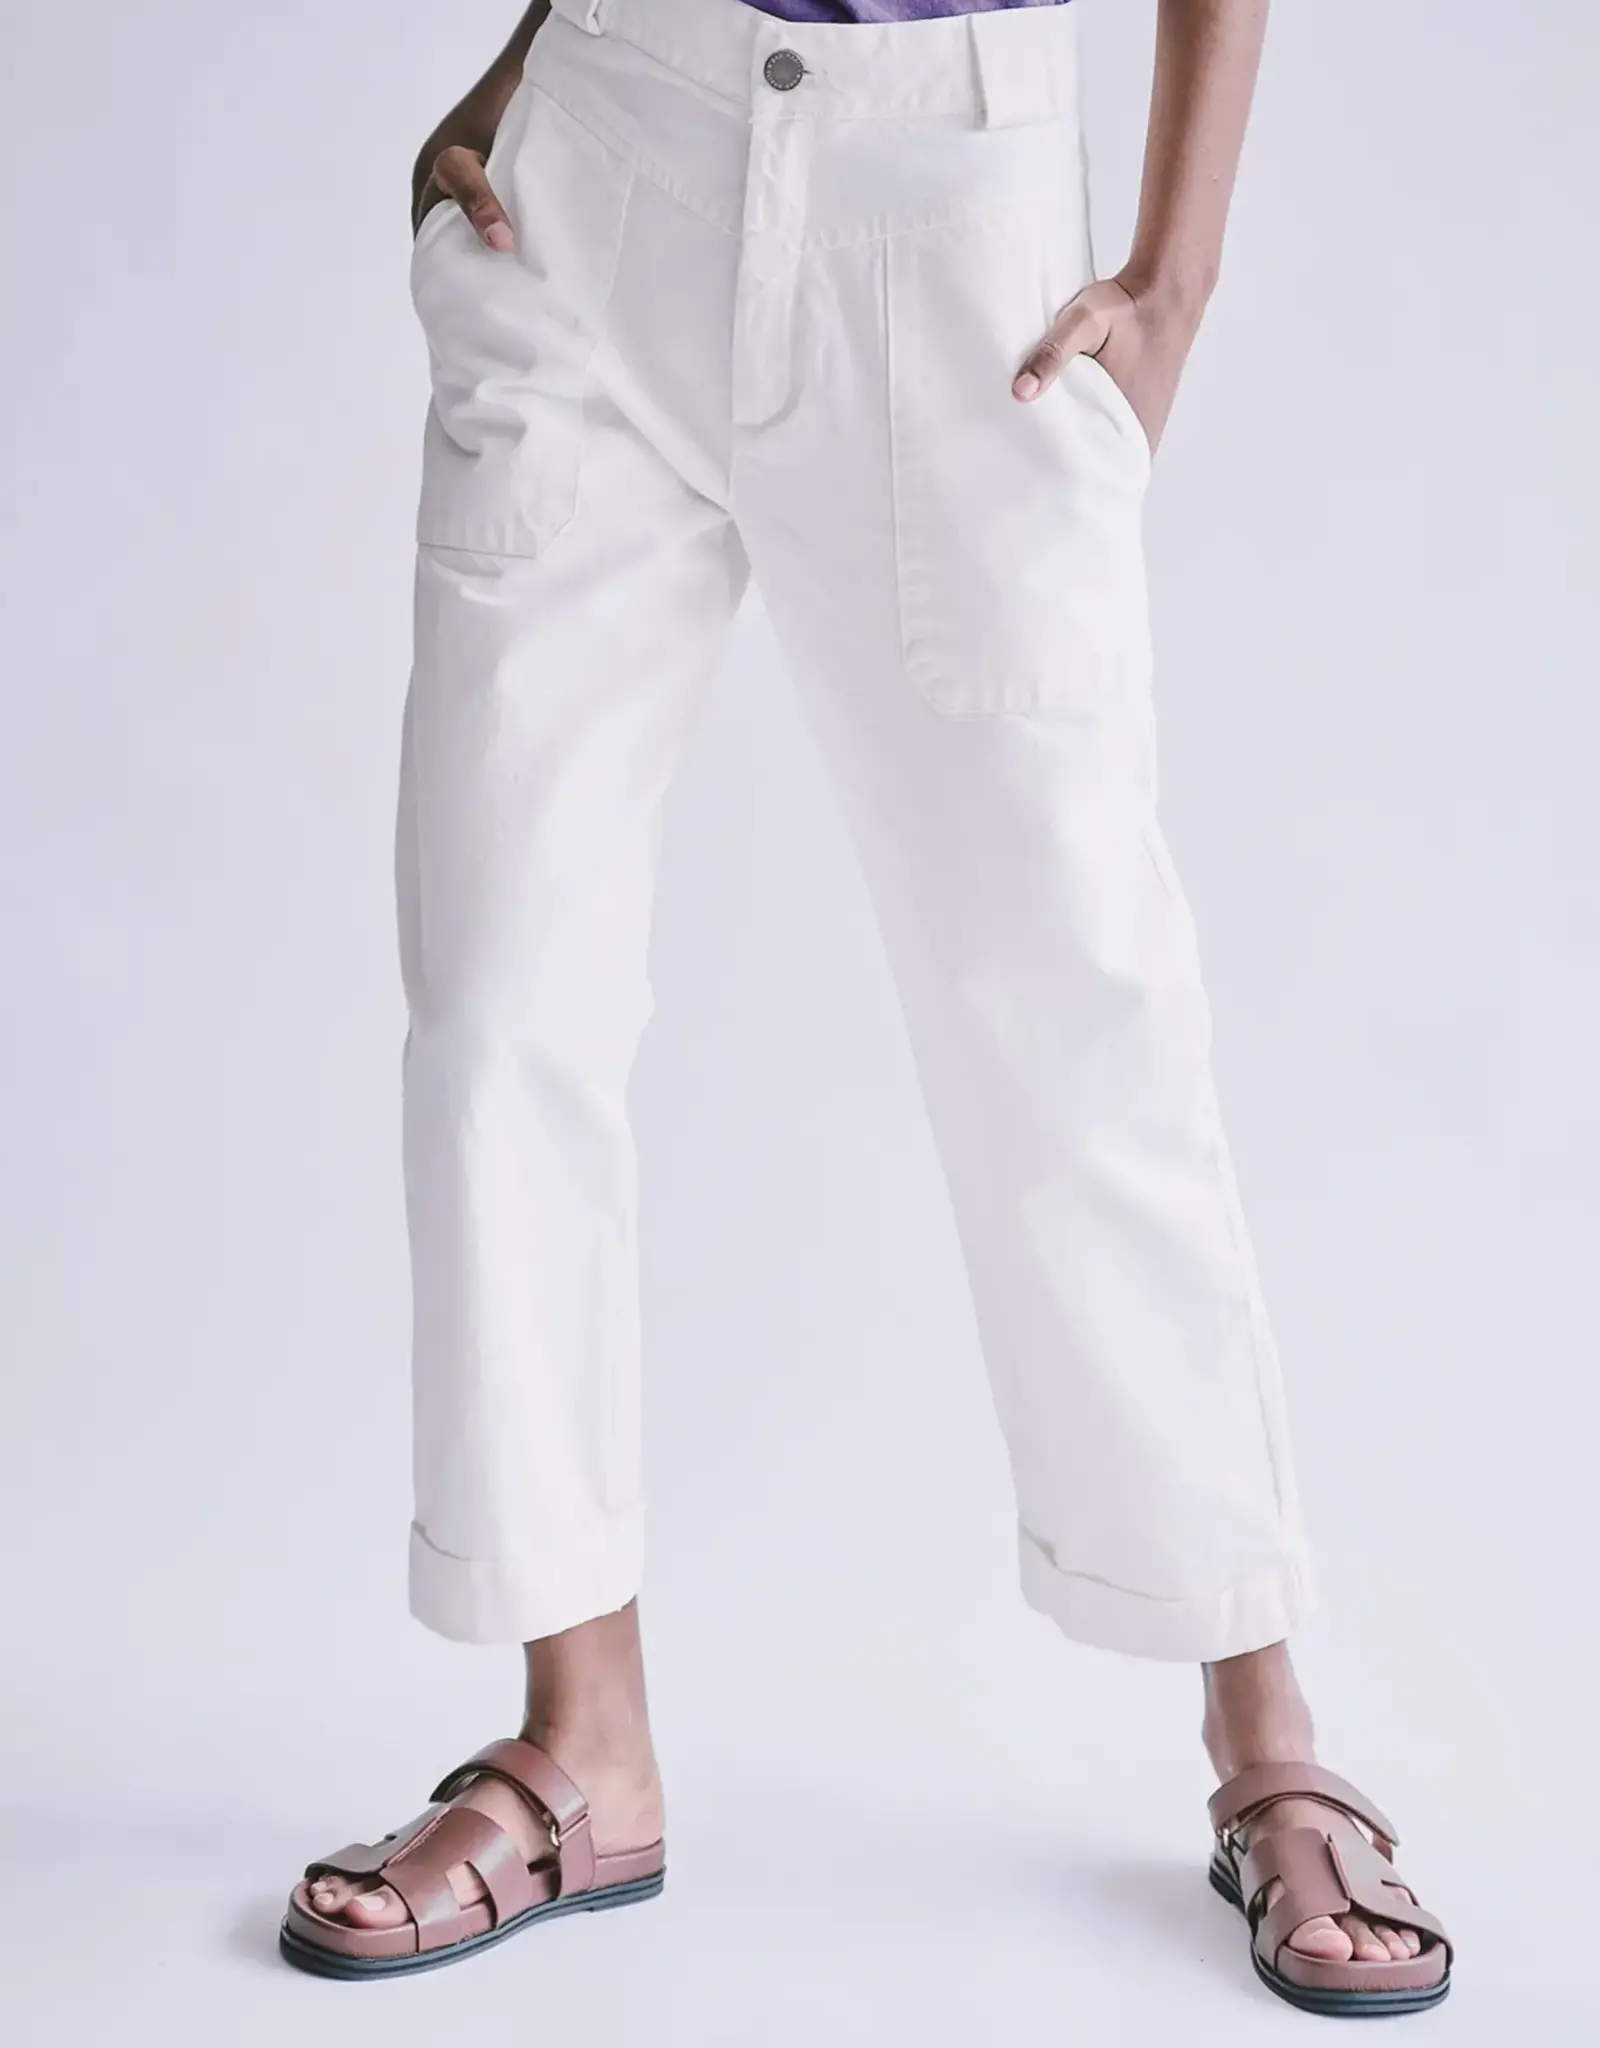 Bad Habits Mykonos Jeans White